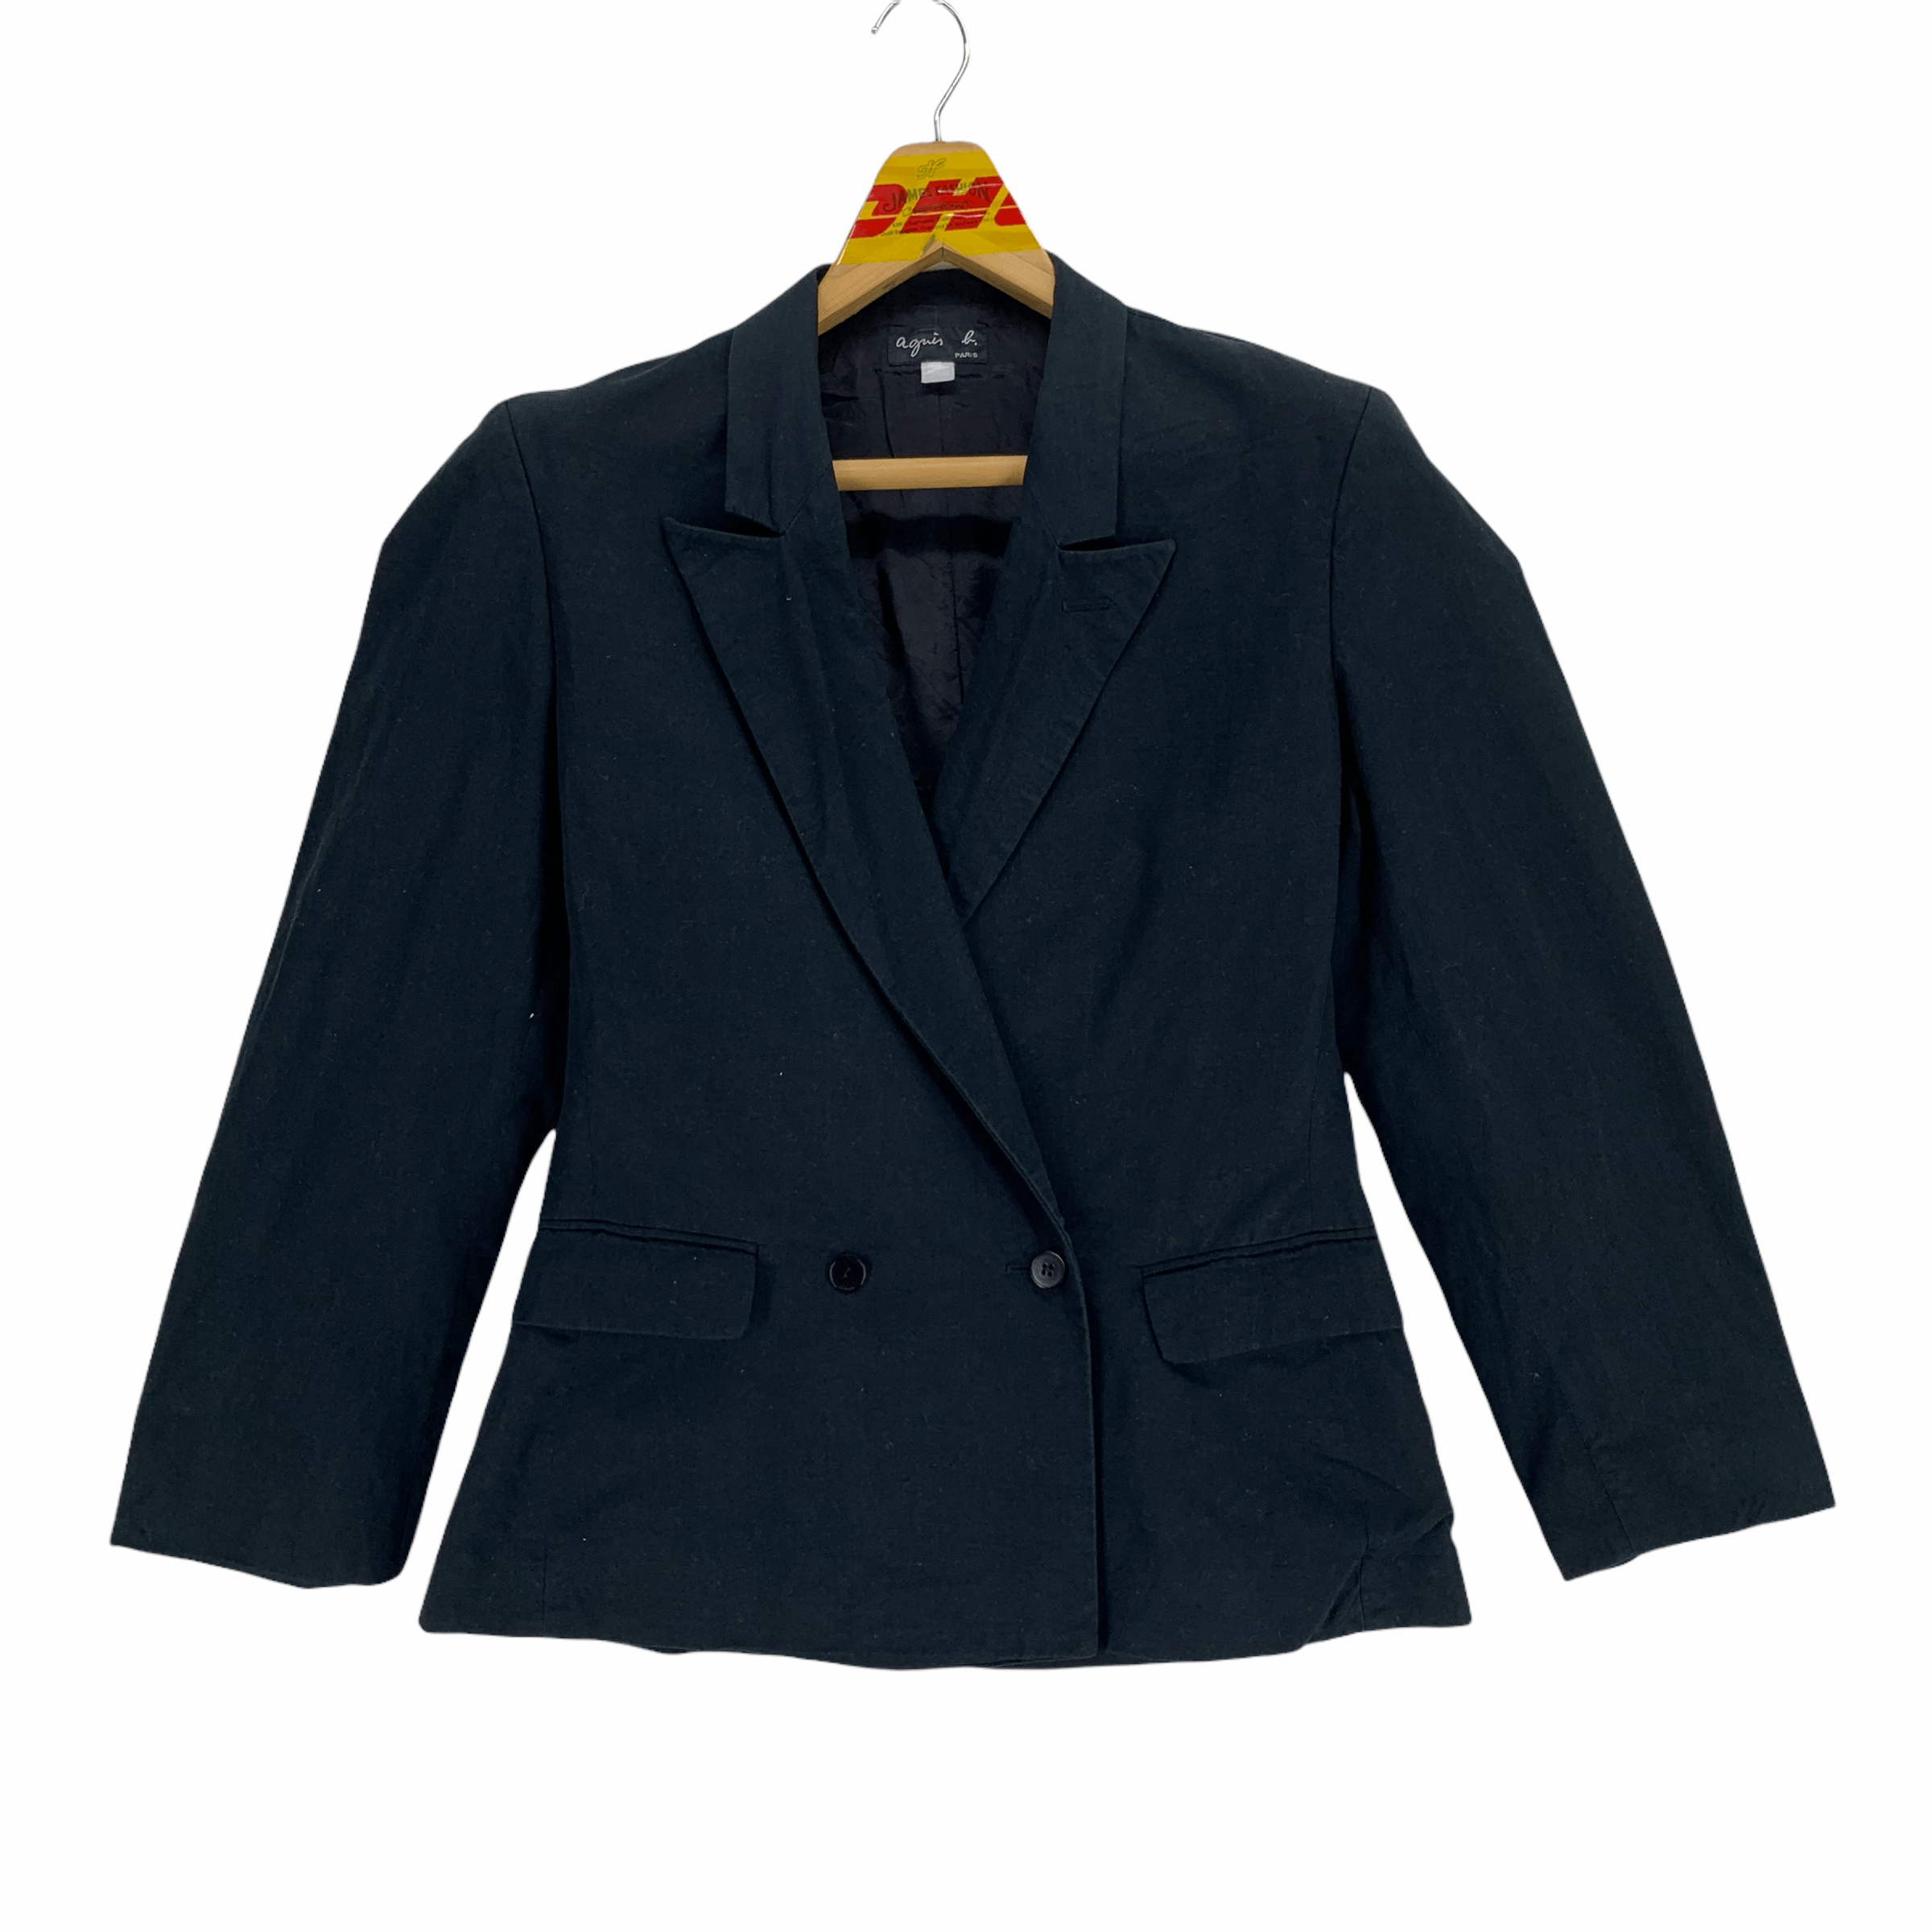 Agnes B. Agnes B. Made in Japan Suit Jacket / Blazer #3276-117 Size XS / US 0-2 / IT 36-38 - 1 Preview